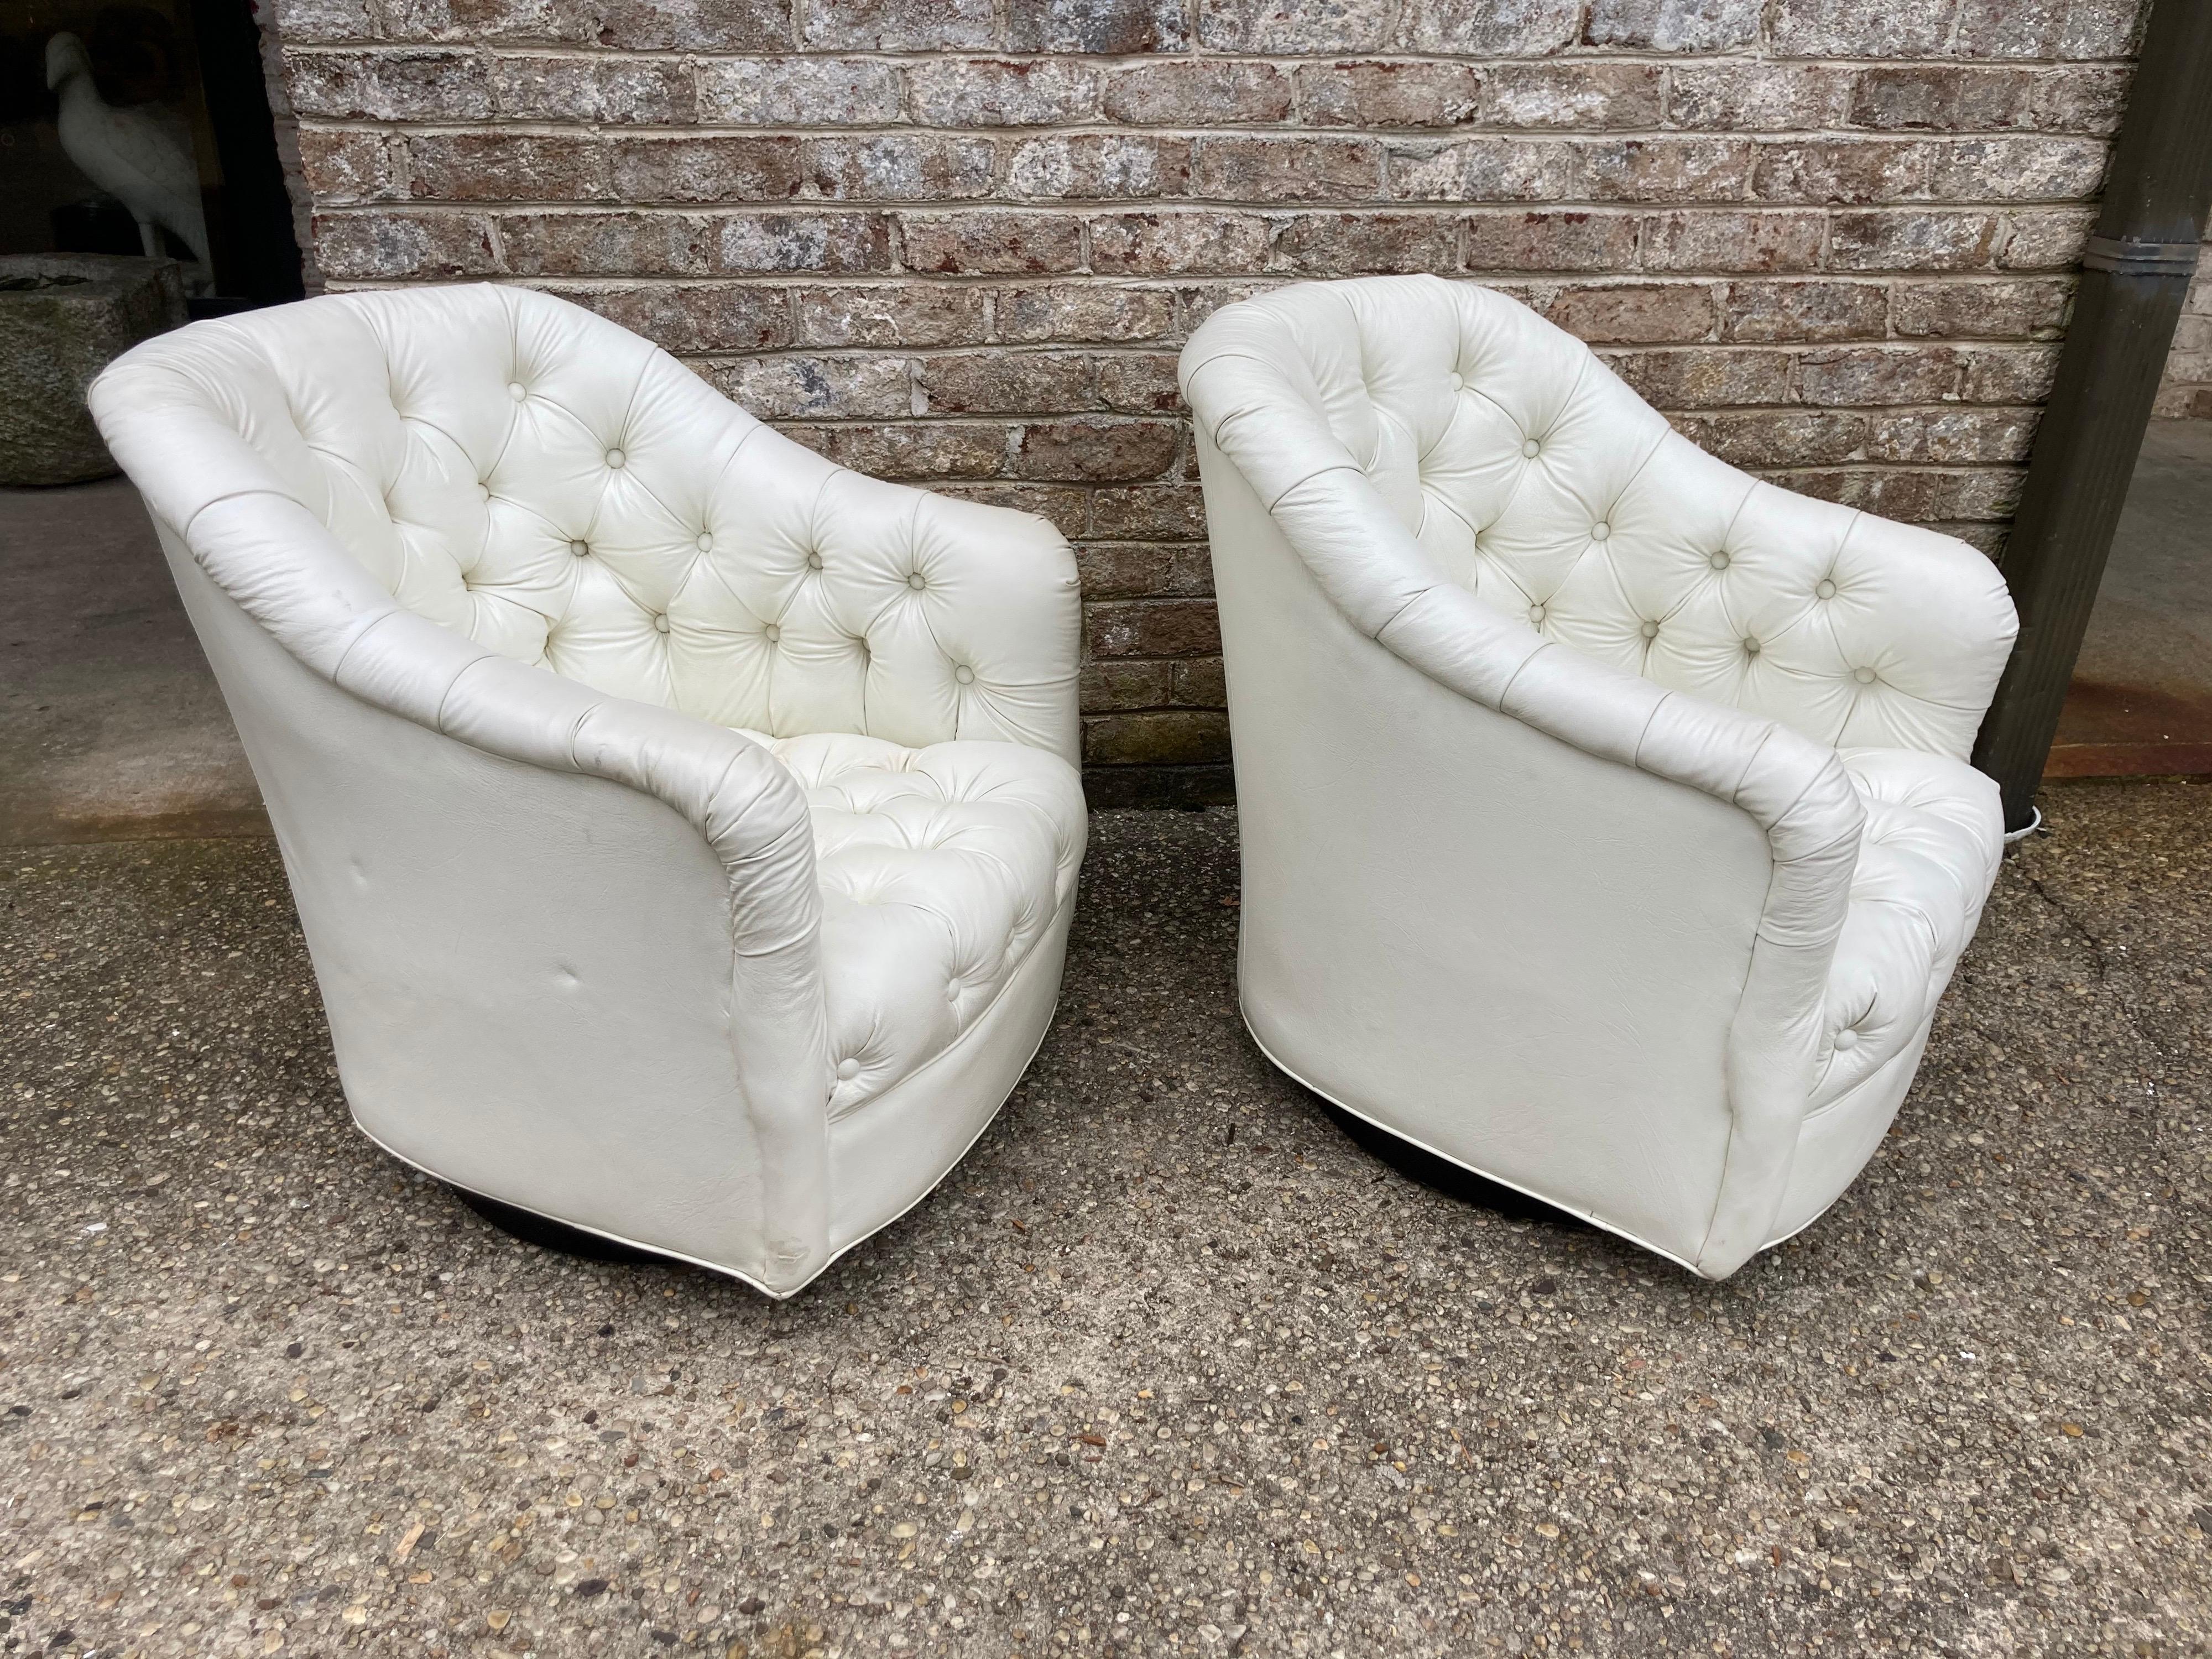 Pair of Ward Bennett style swivel armchairs in original white upholstery.